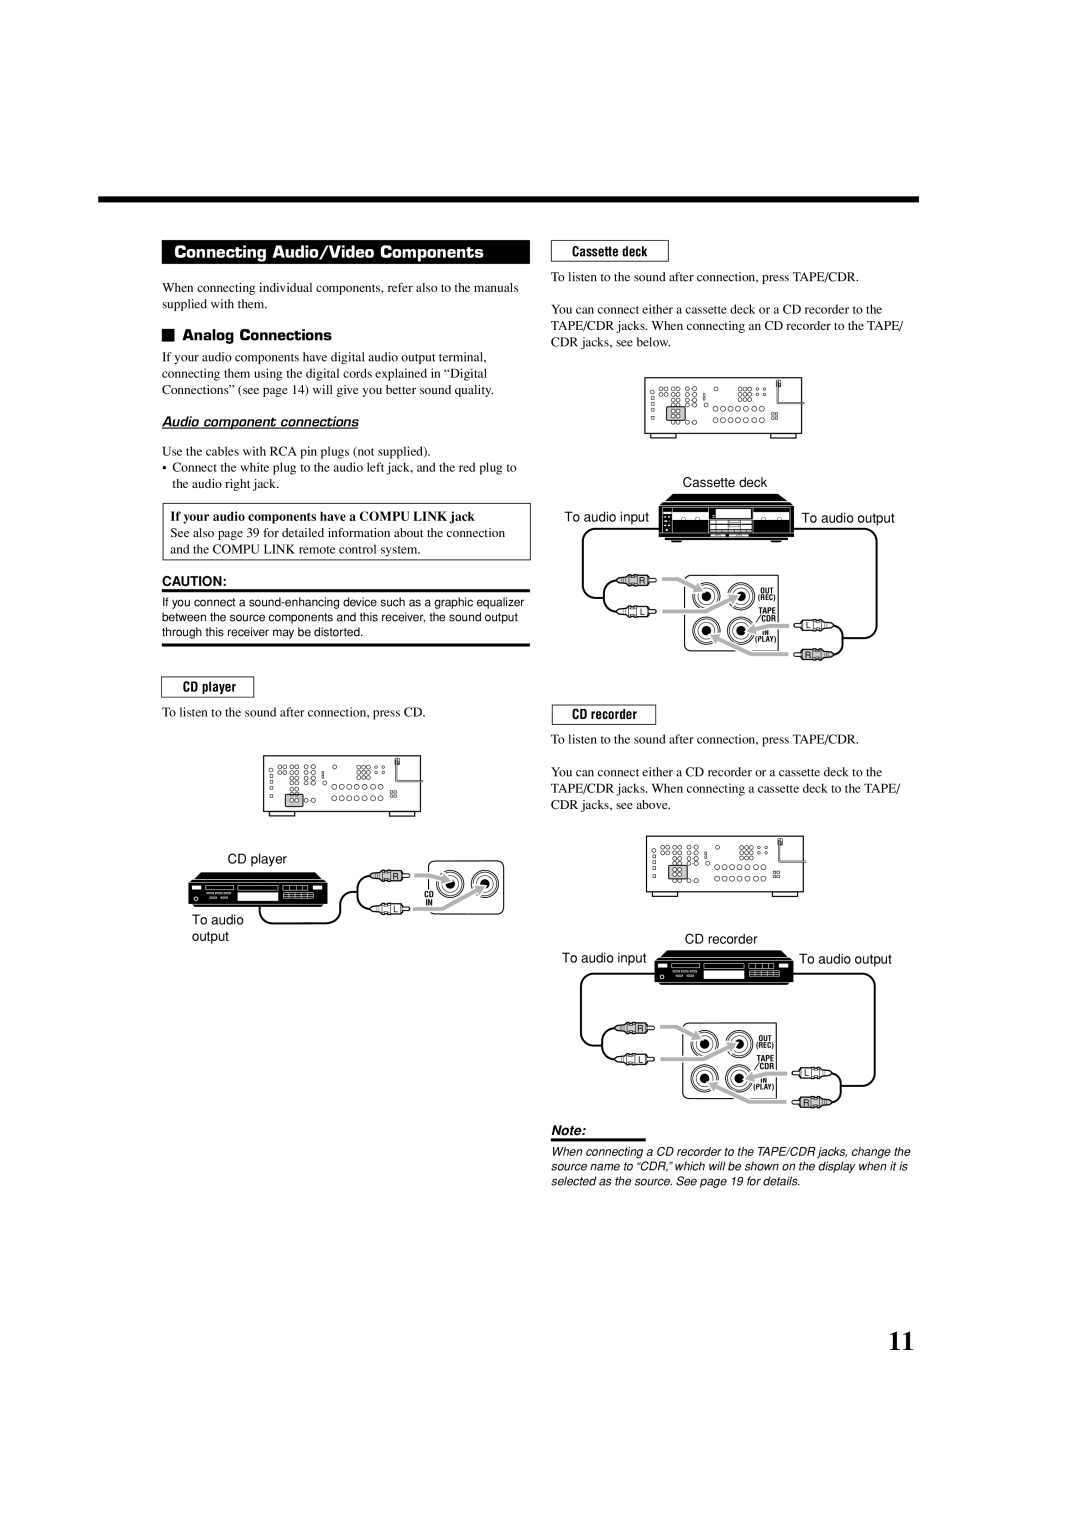 JVC LVT1007-010A[A] manual Connecting Audio/Video Components, Analog Connections, Audio component connections 